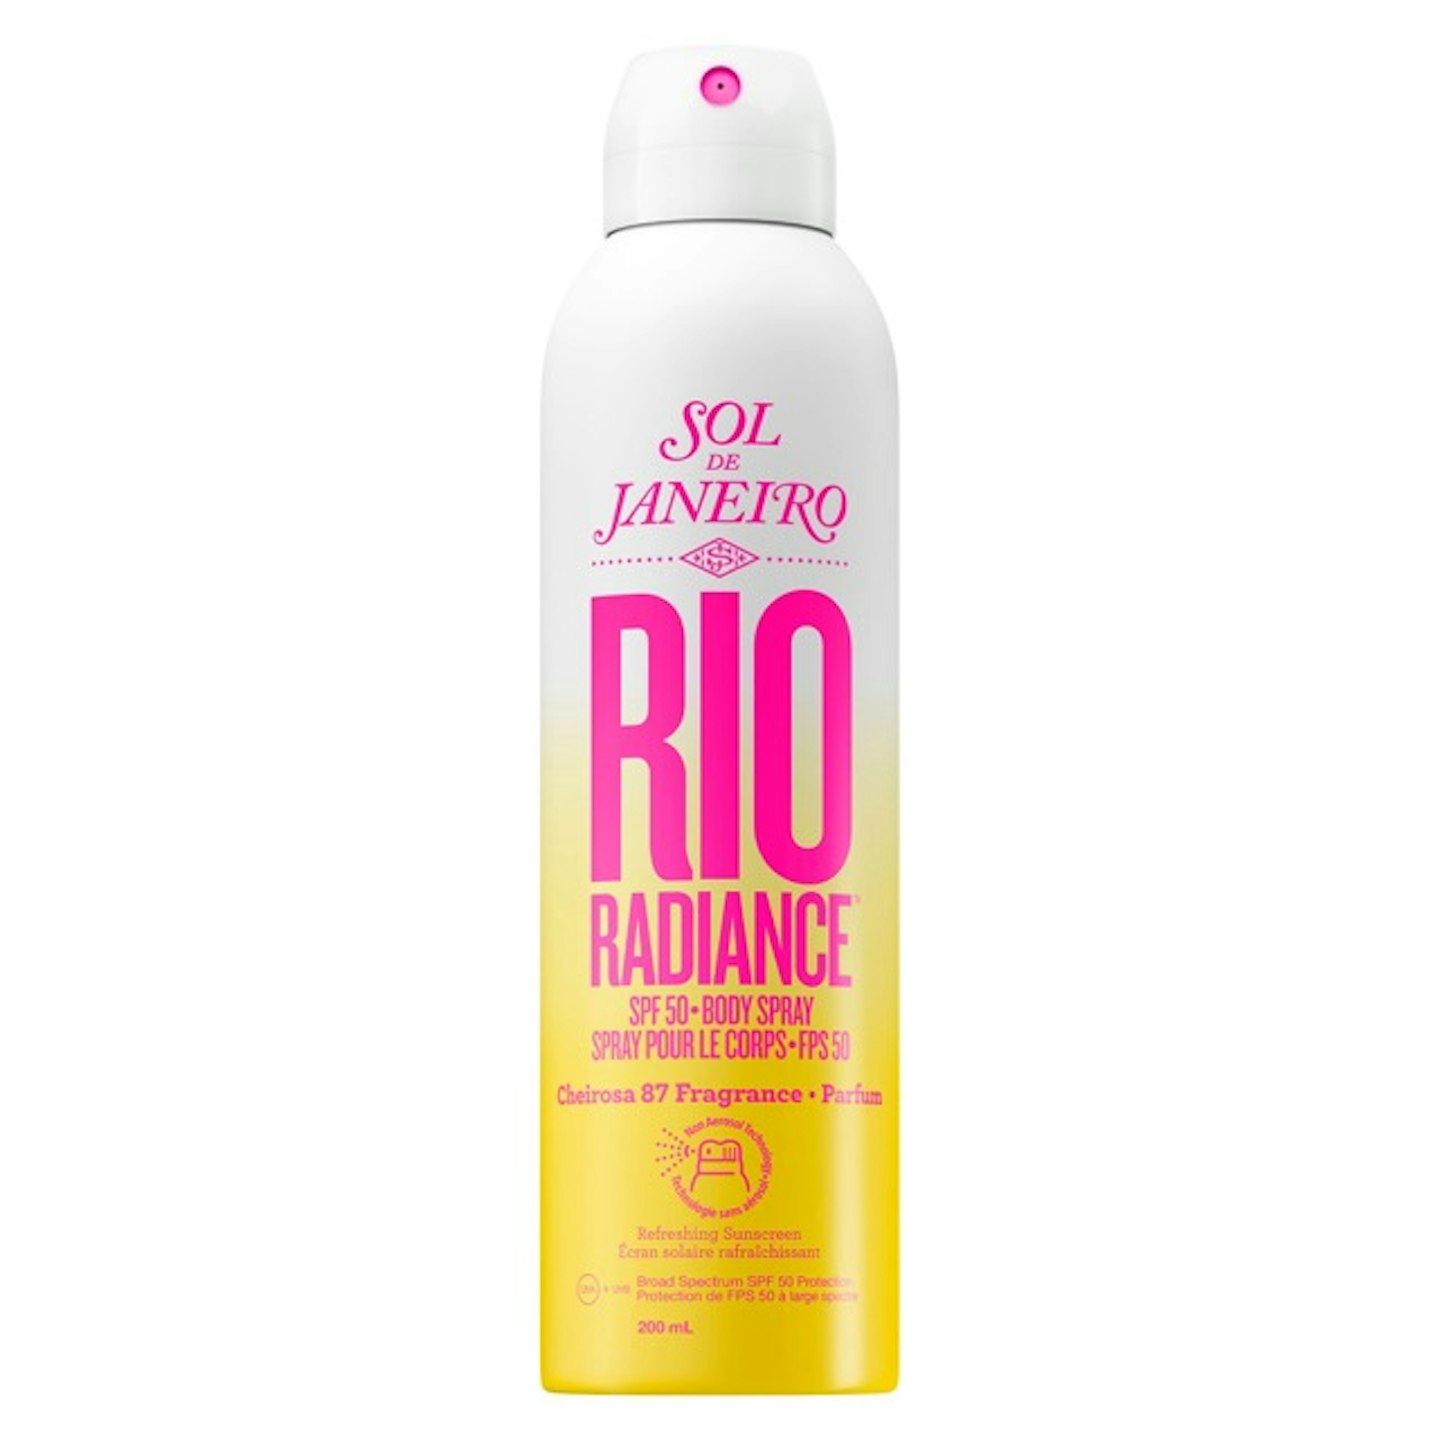 Sol De Janeiro Rio Radiance SPF50 Body Spray